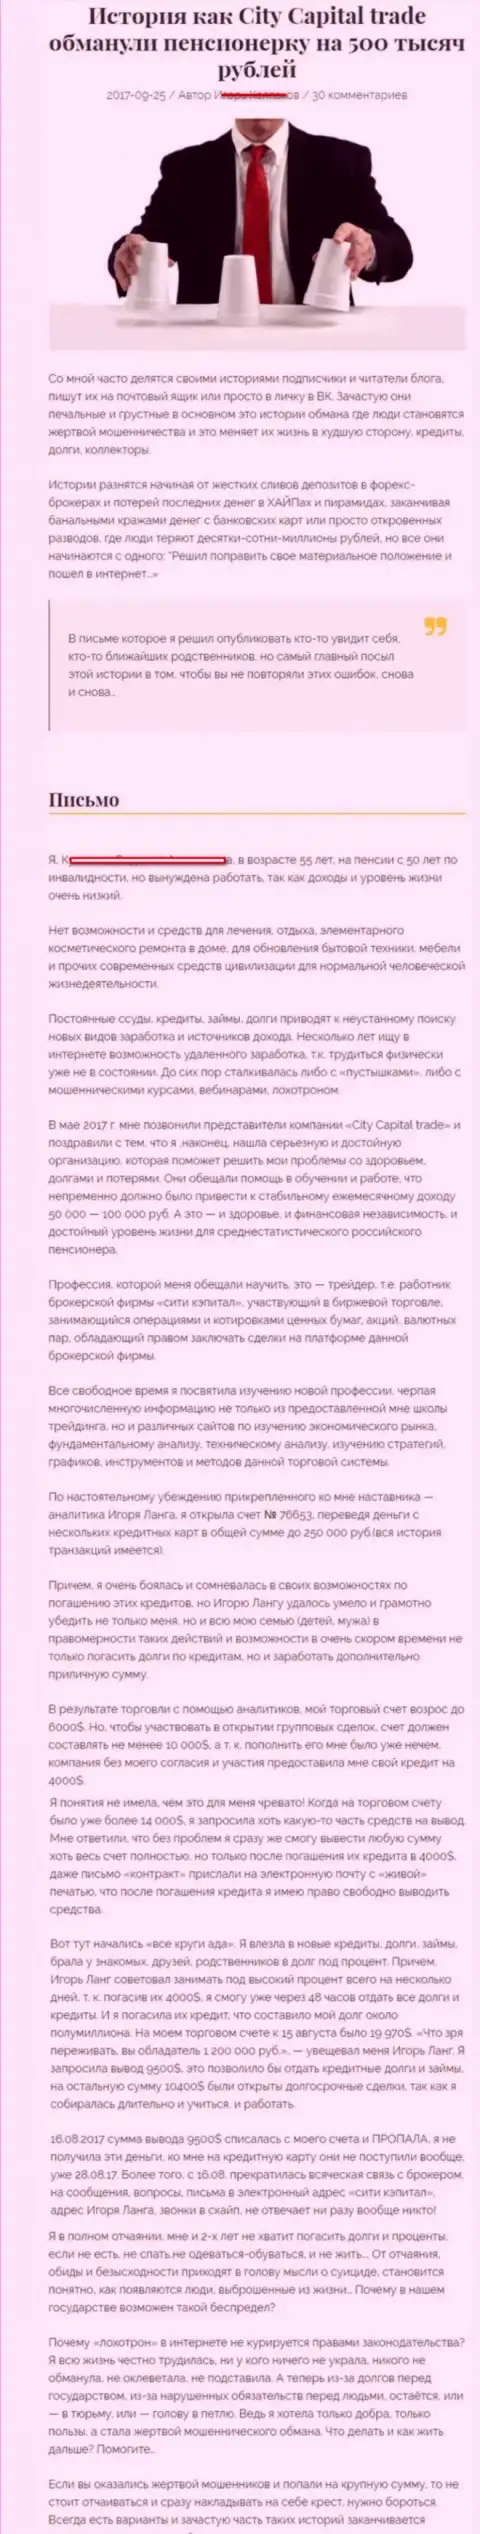 Сити Капитал Трейд развели клиентку на пенсии - инвалида на 500 000 рублей - МОШЕННИКИ !!!